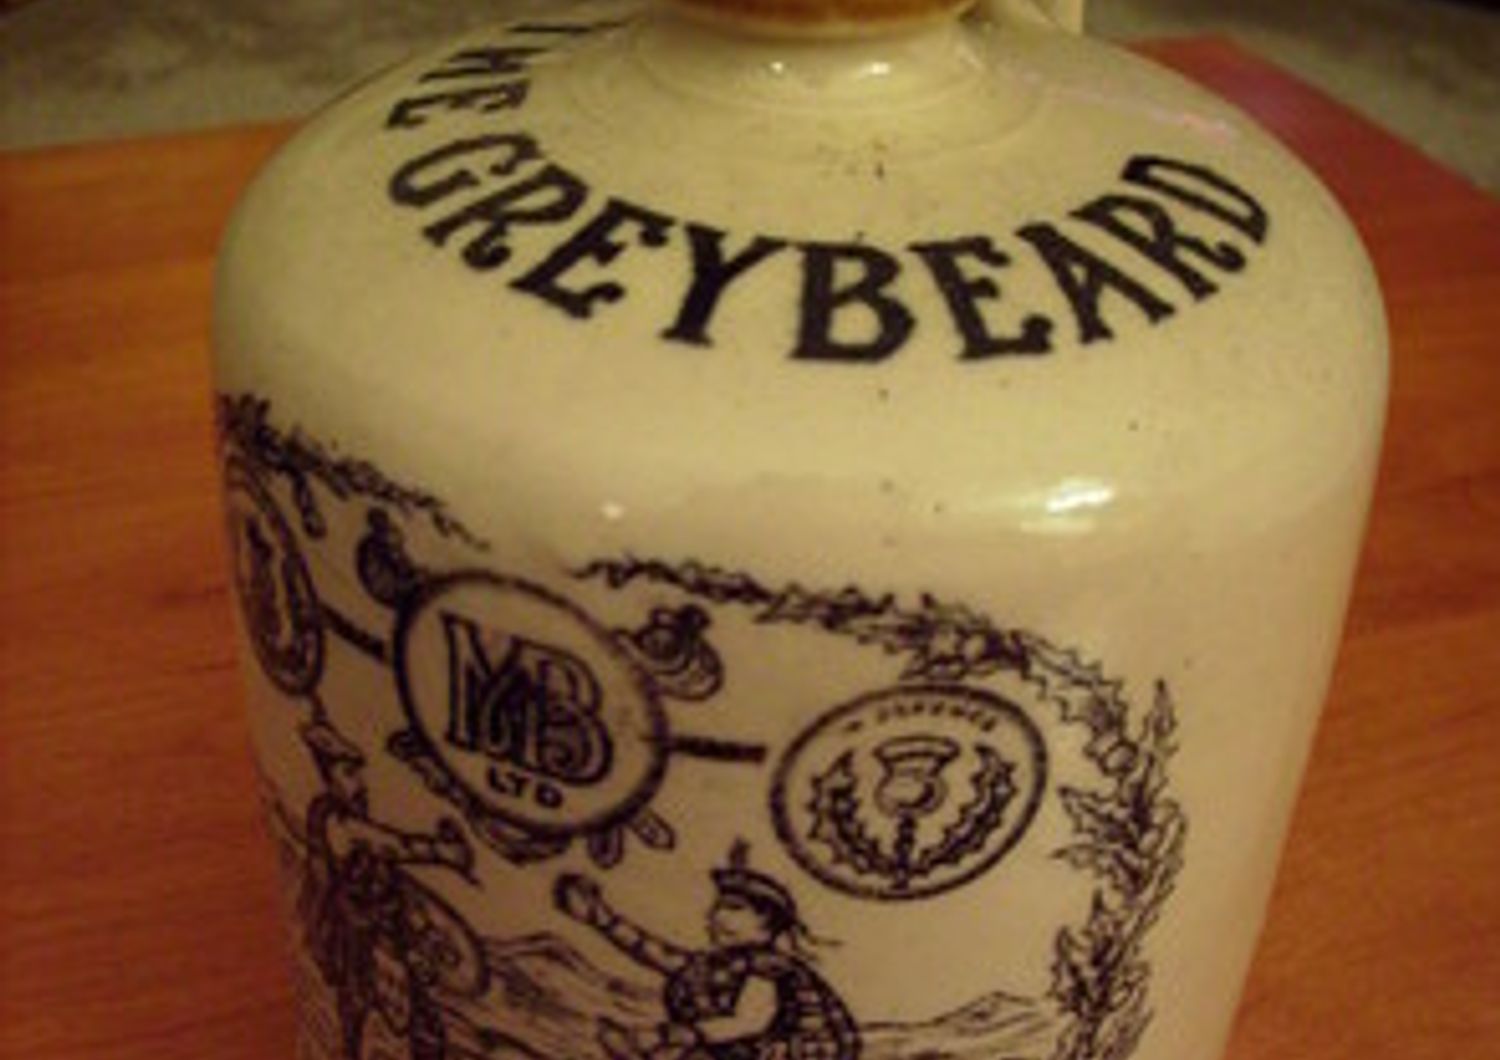 Greybeard Heather Dew - Scotch Whisky&nbsp;(wikipedia)